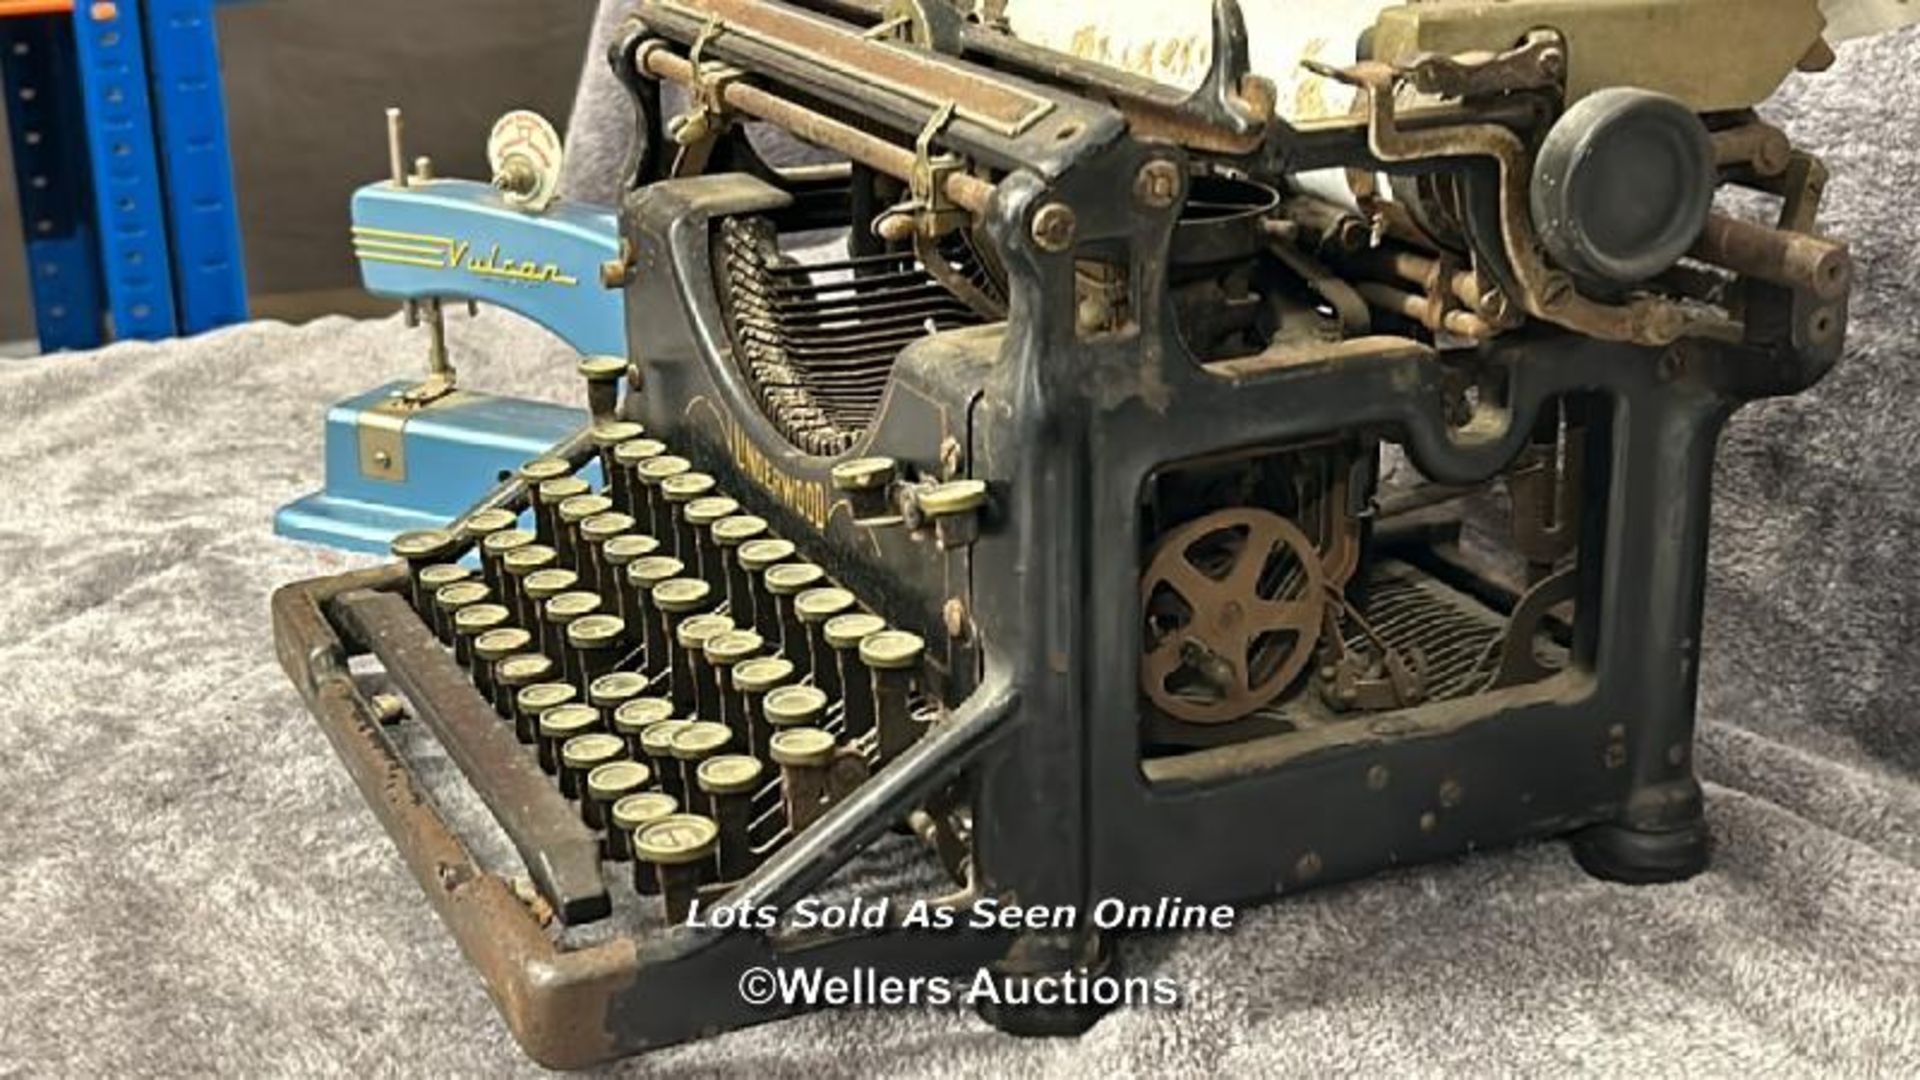 Vintage Underwood typewriter and Vulcan mini sewing machine / AN25 - Image 3 of 4